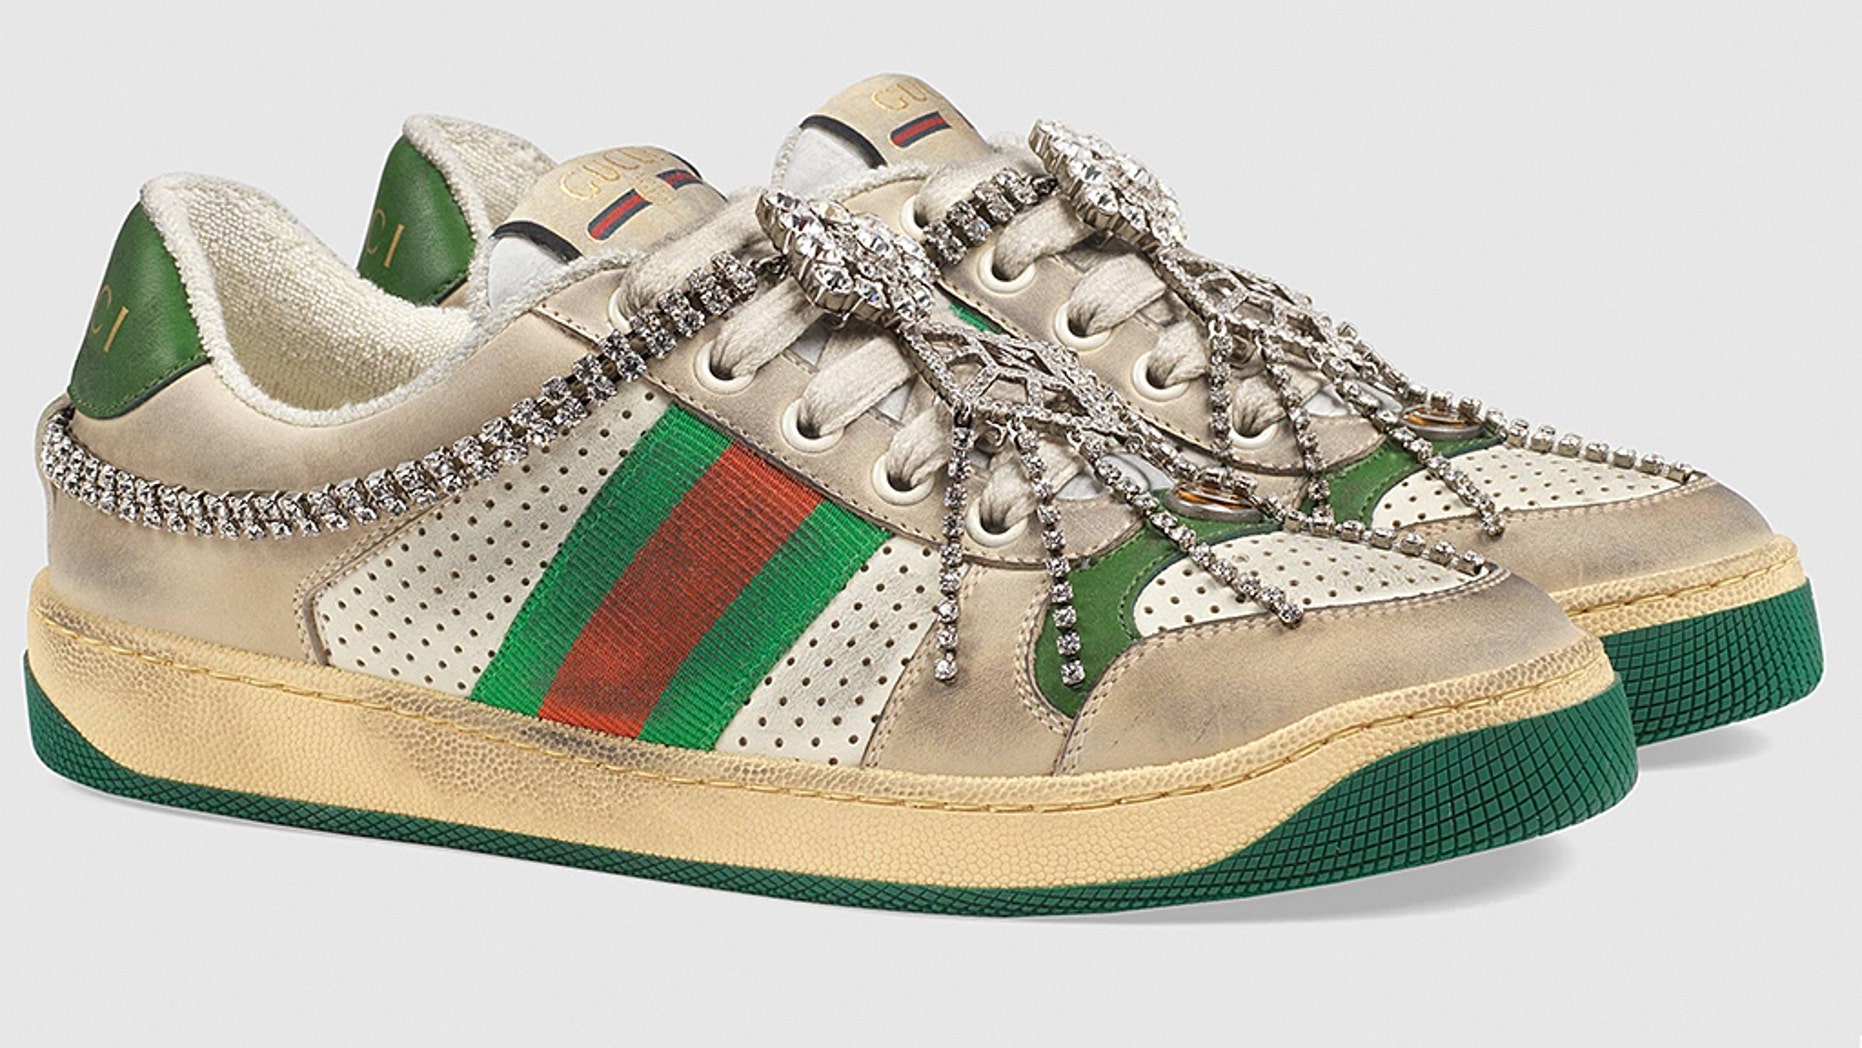 Gucci's $900 'dirty' sneakers slammed 